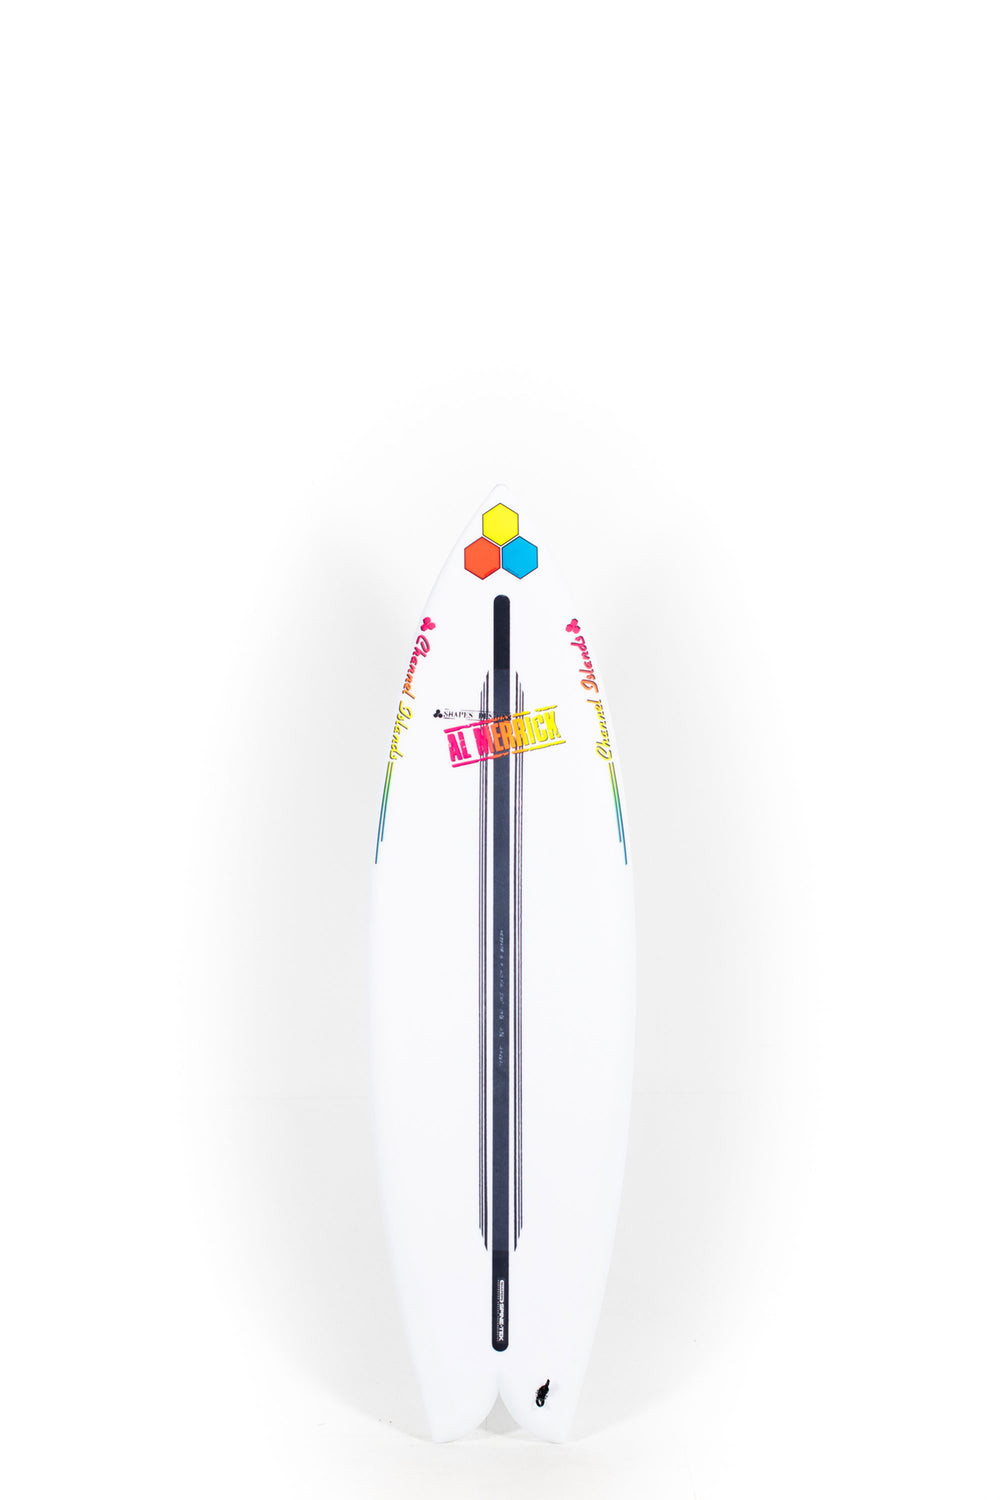 Pukas Surf Shop - Channel Islands - FISHBEARD - Spine Tek - 5'10